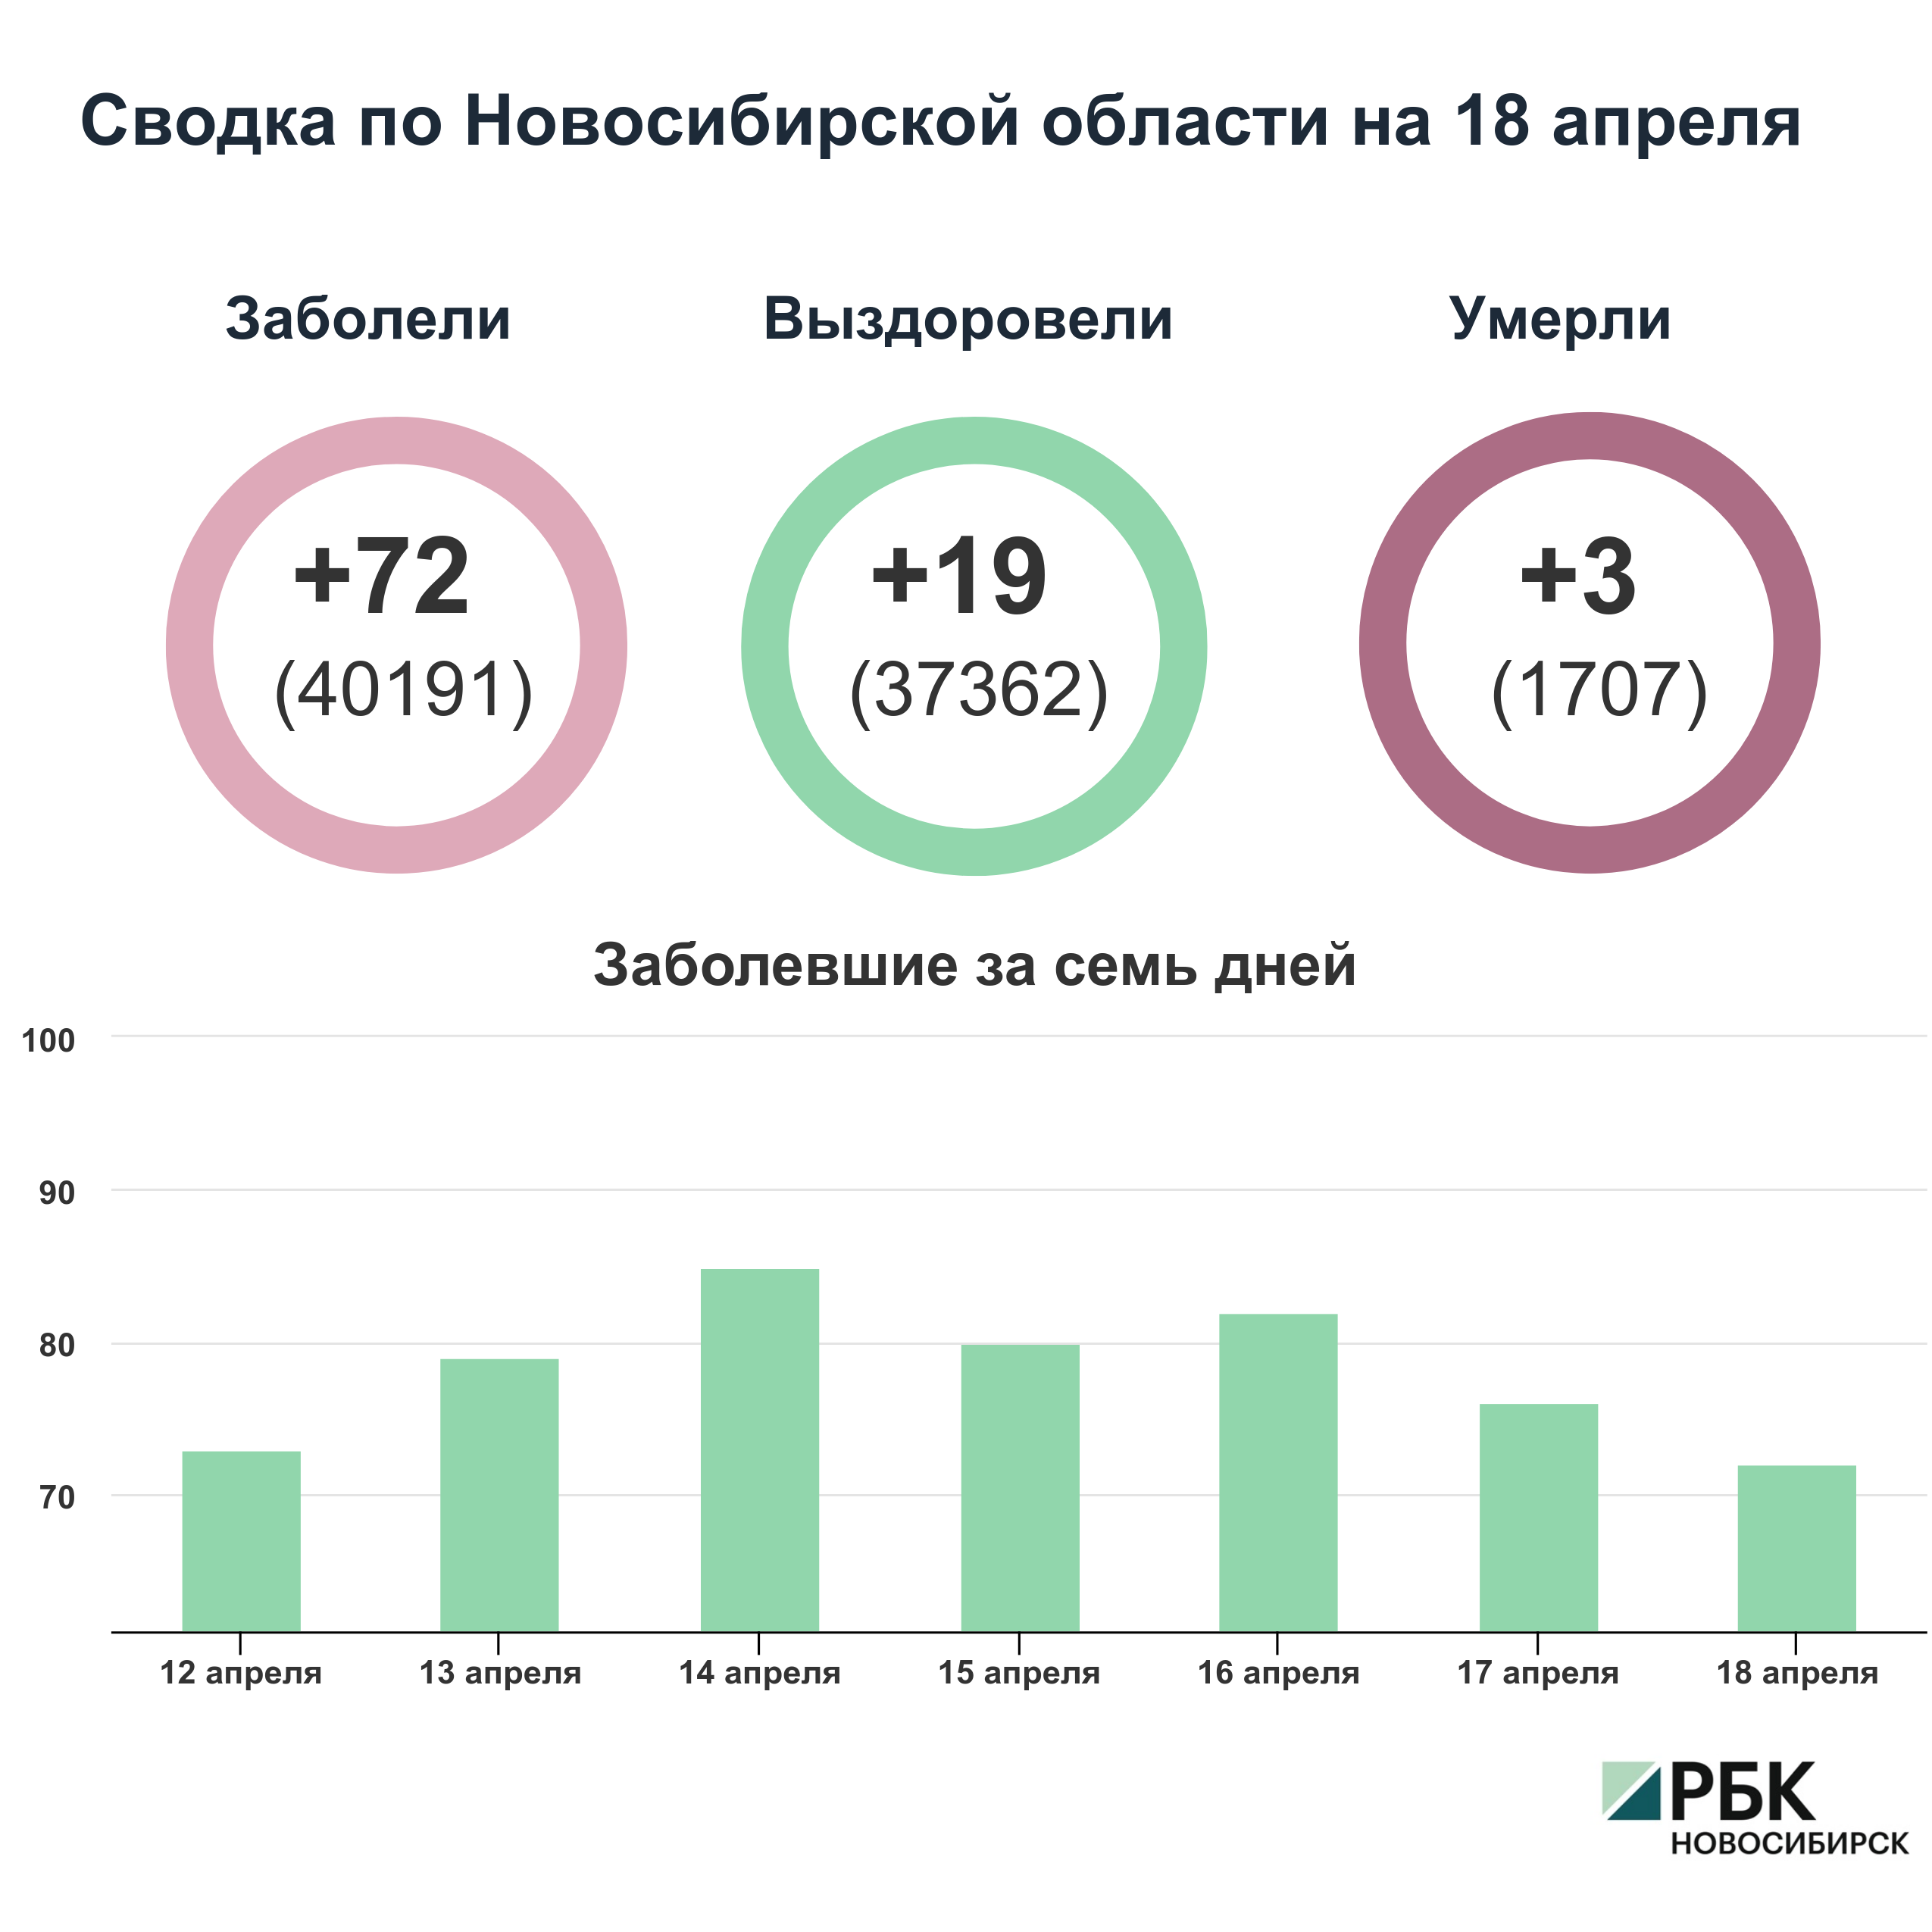 Коронавирус в Новосибирске: сводка на 18 апреля